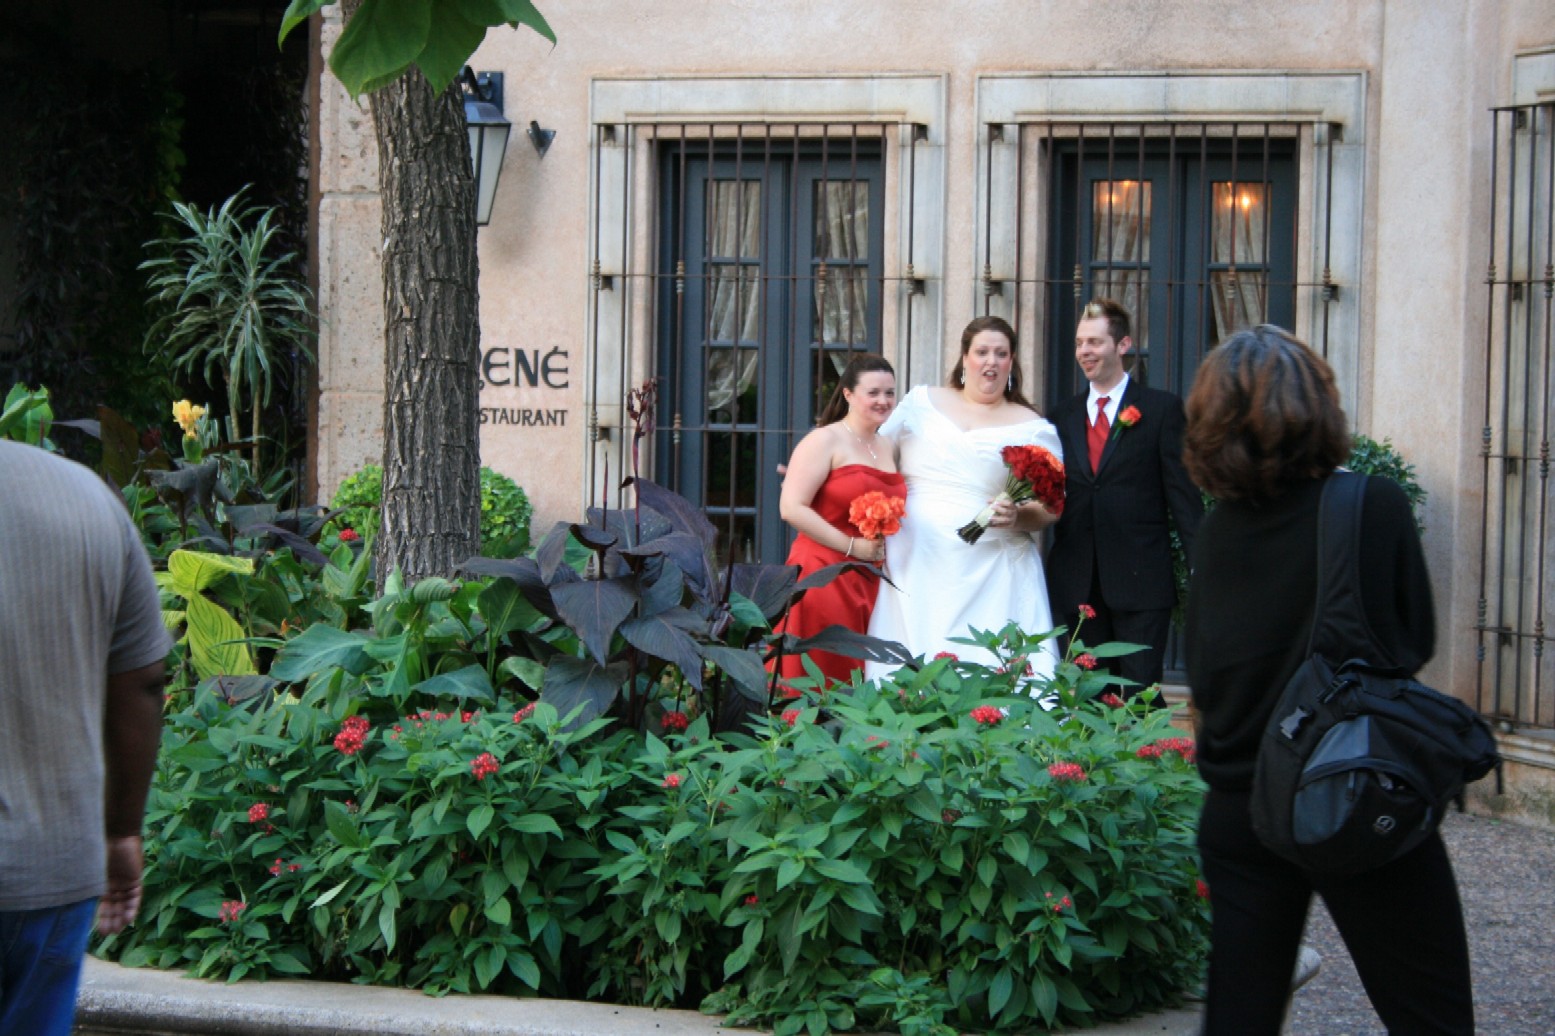 Sedona Wedding Photographer Capturing The Bride and Attendants 